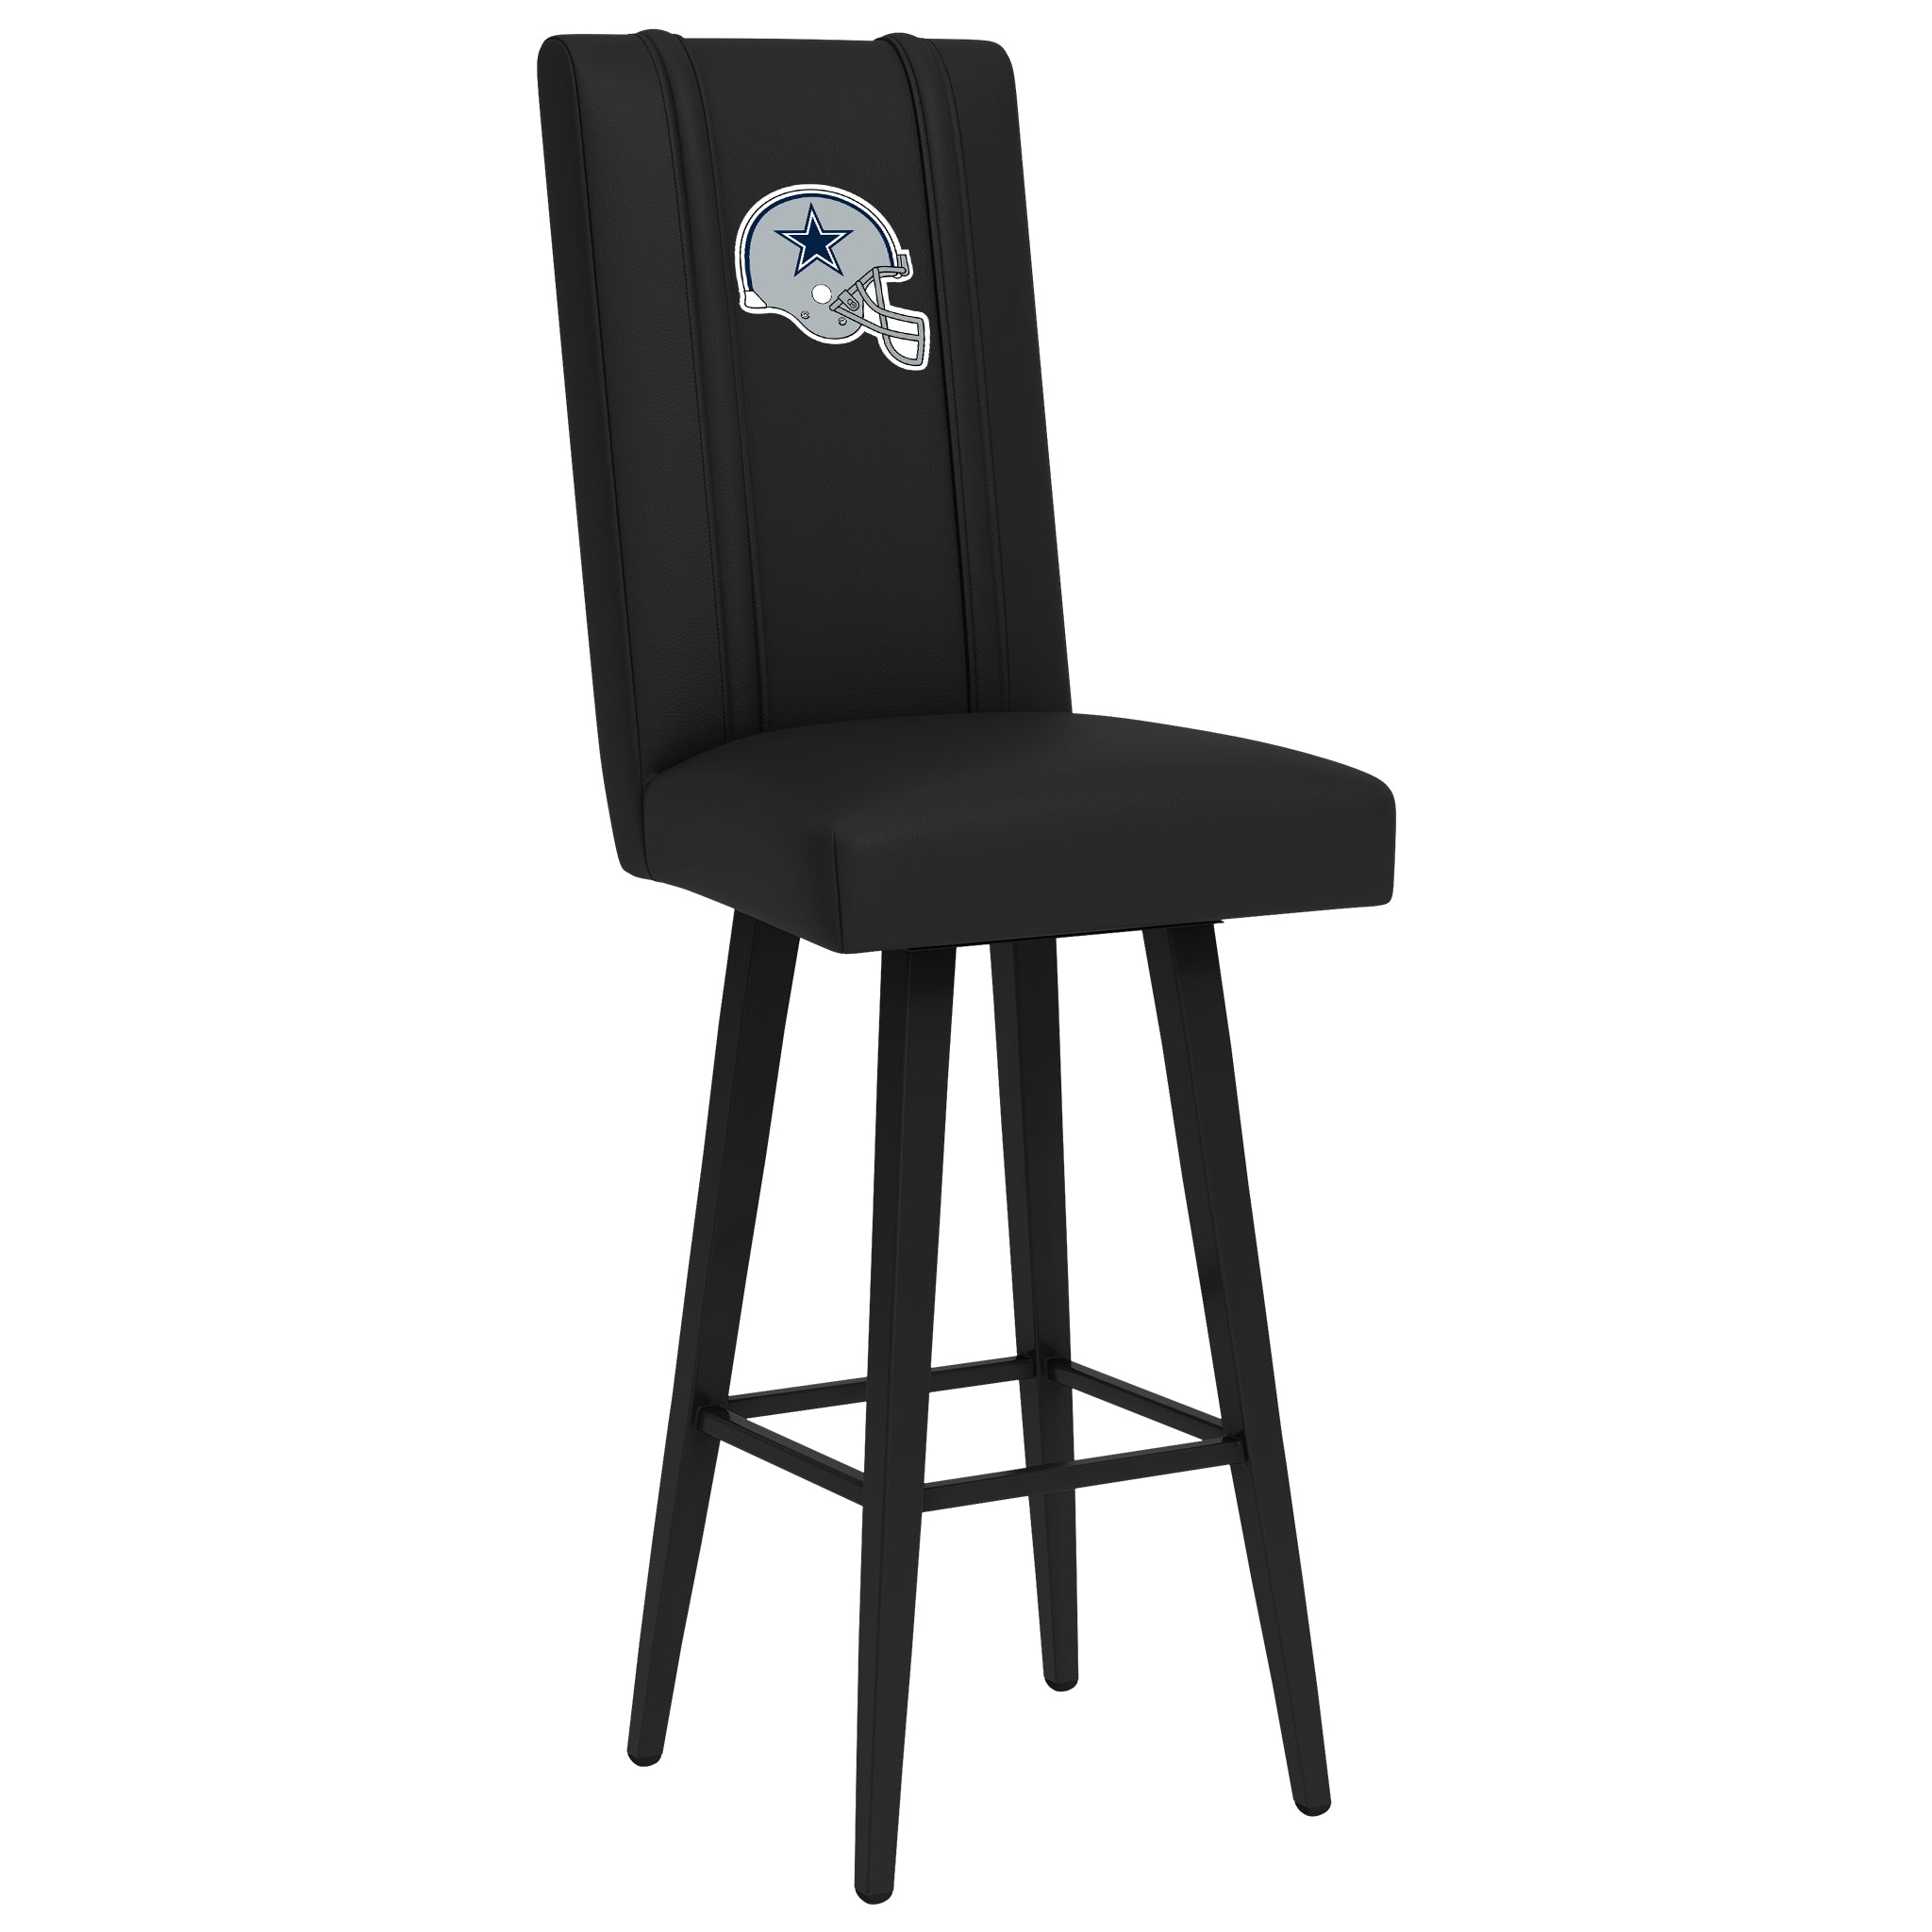 Dallas Cowboys Swivel Bar Stool - Chair - Furniture - Kitchen